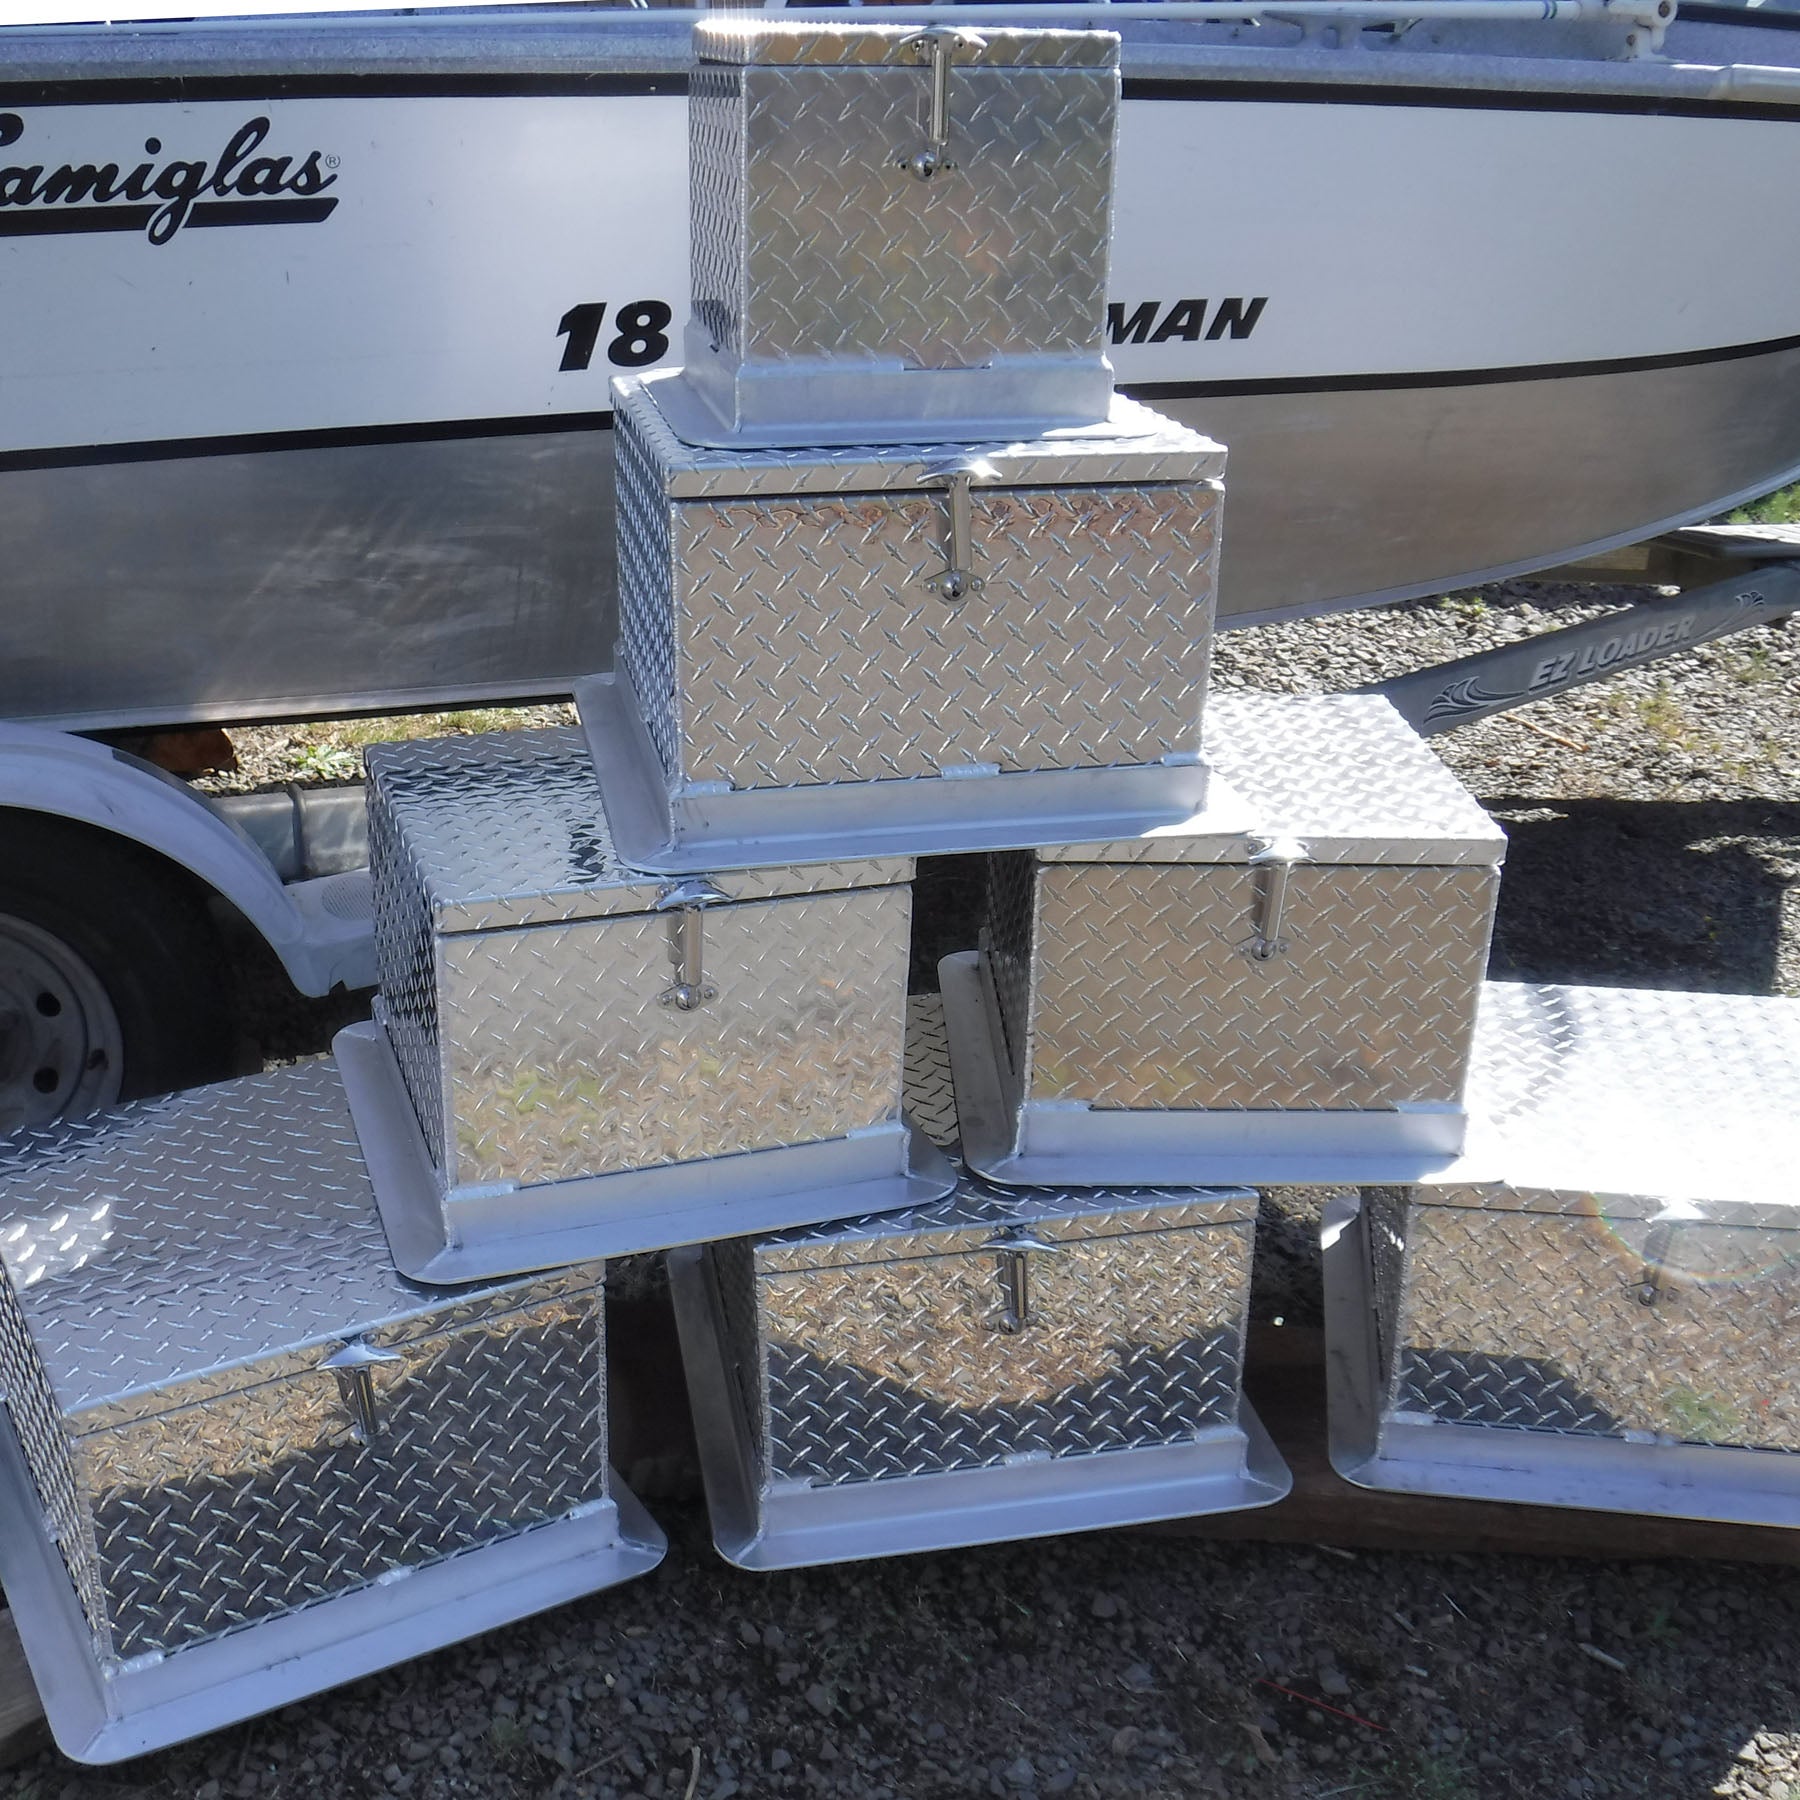 Boat Seat Storage Guide Series™ Hinged Storage Box